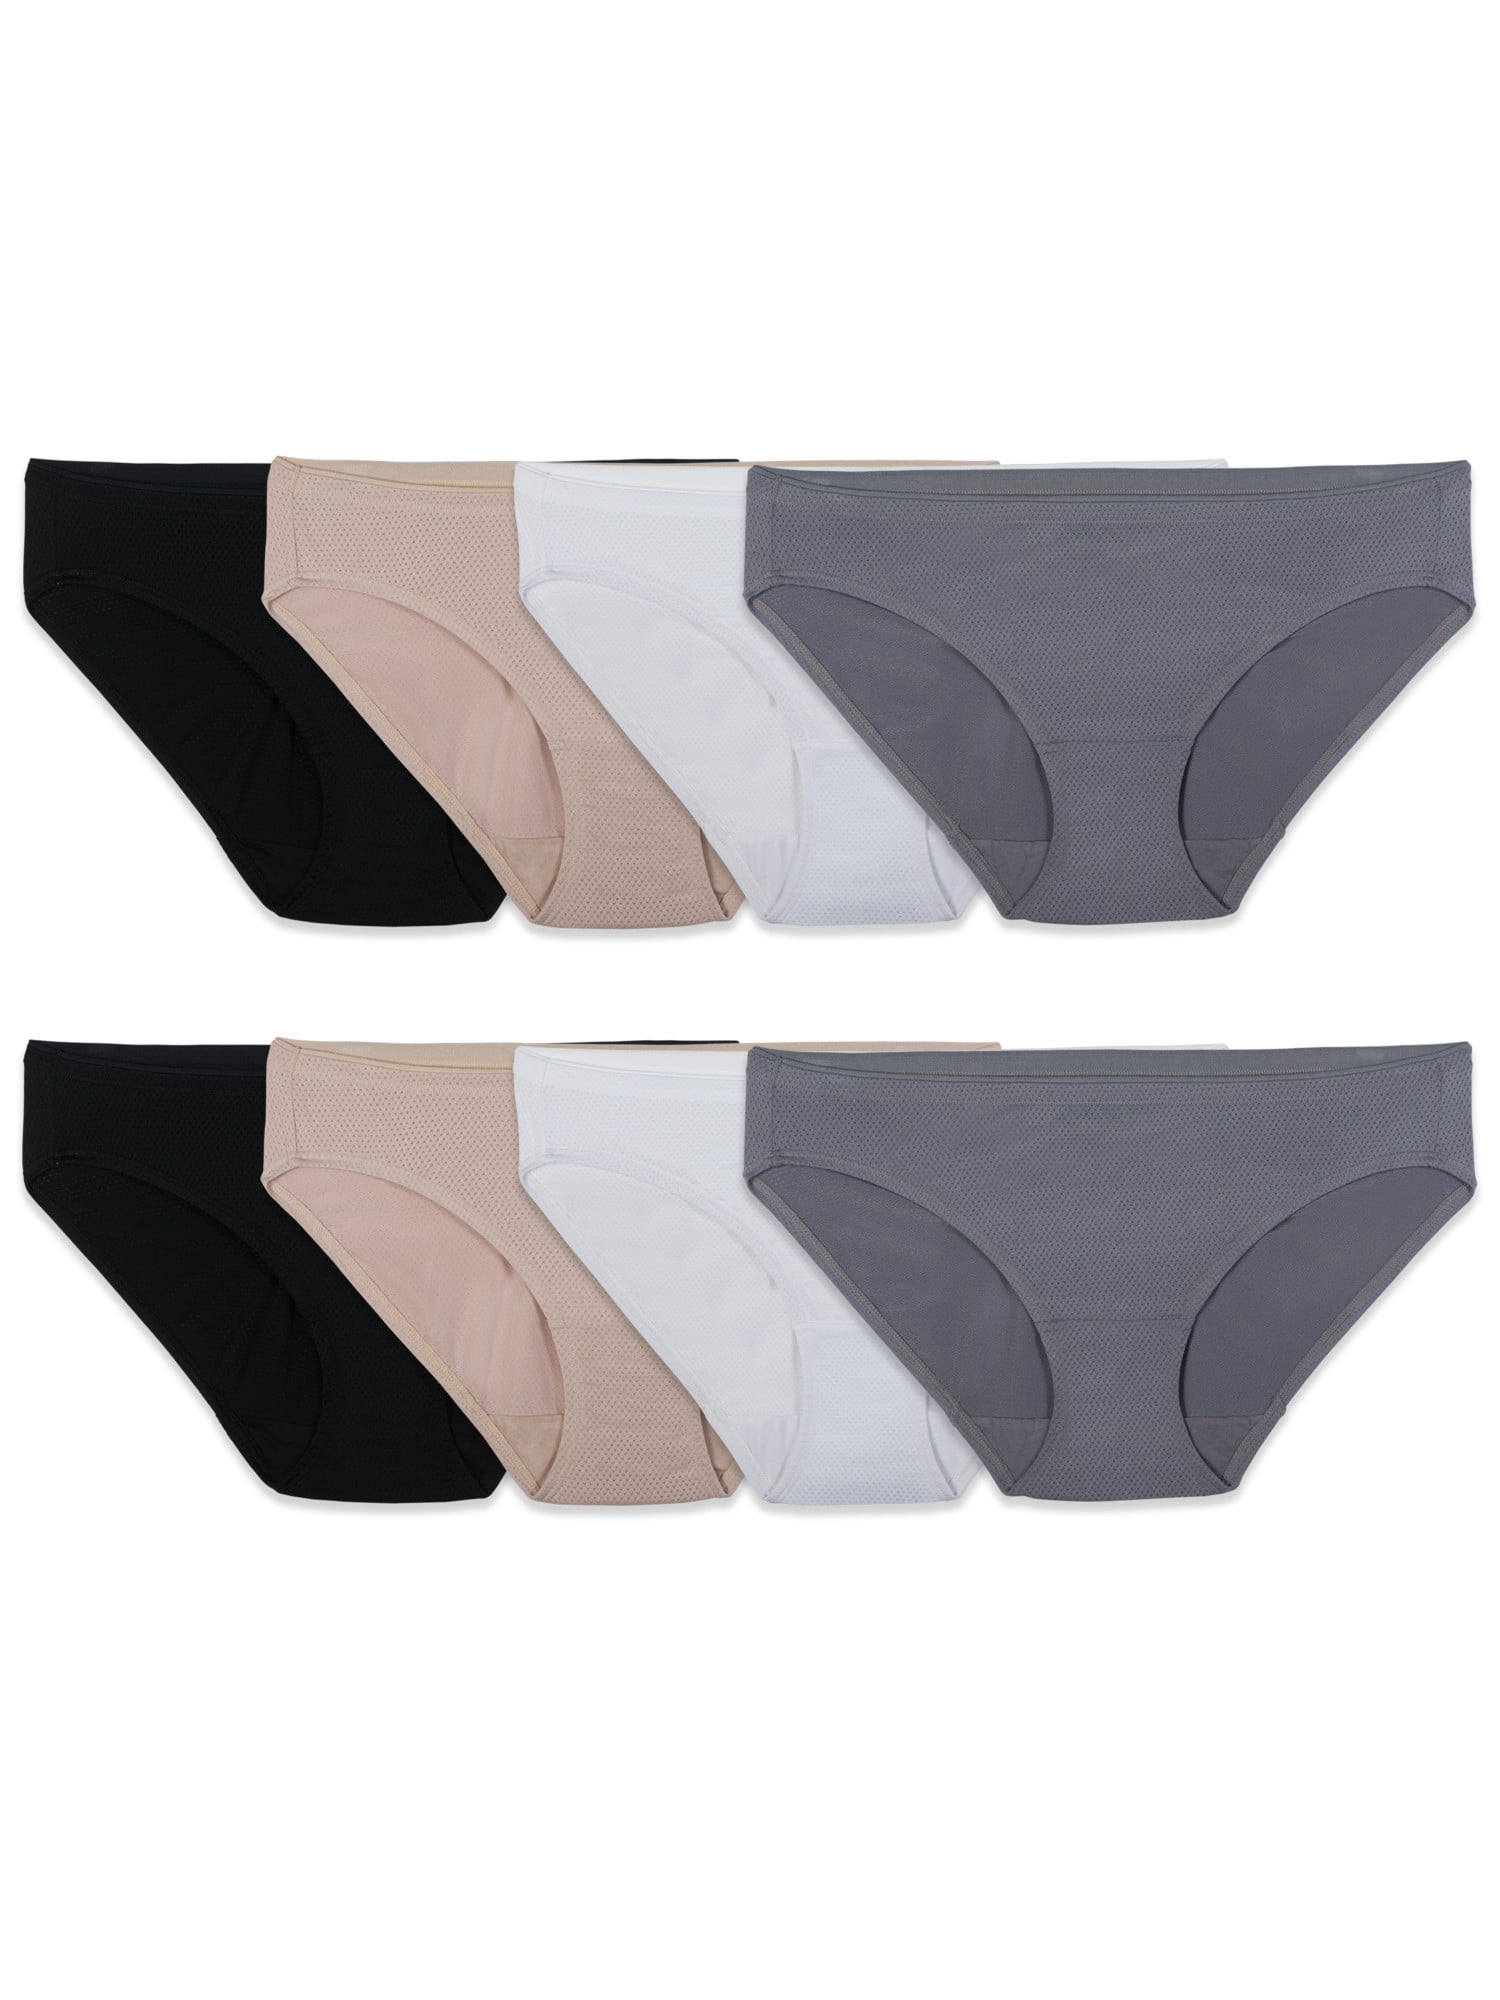 Fruit of the Loom Women's Breathable Micro-Mesh Bikini Underwear, 8 Pack,  Sizes S-2XL